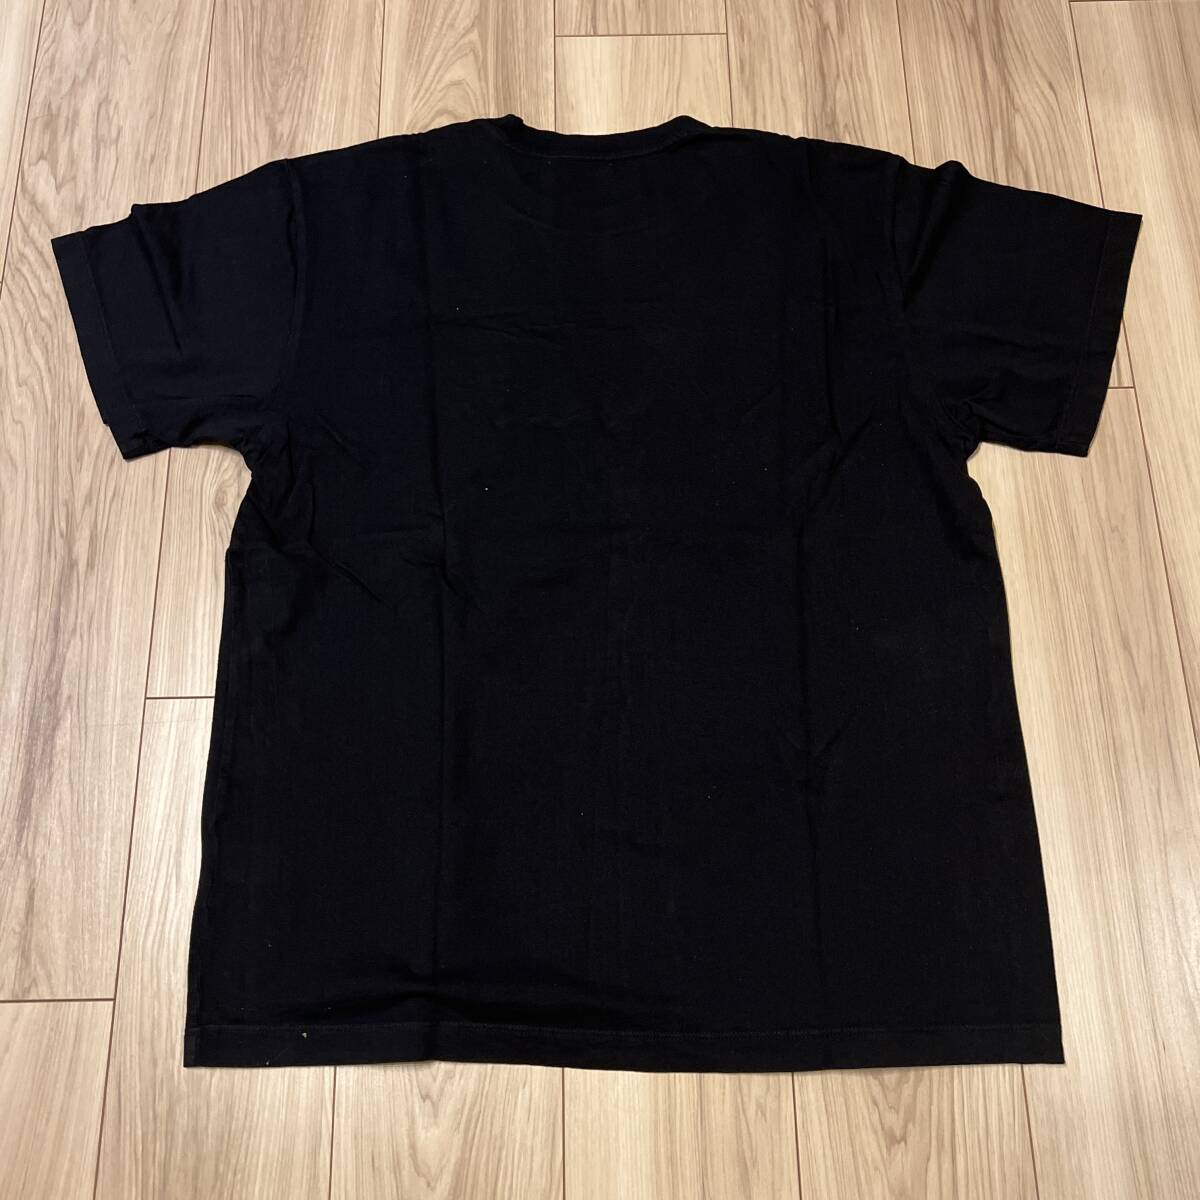 JOHN ELLIOTT Tシャツ ブラック Mサイズ 定価16,500円 未使用品の画像5